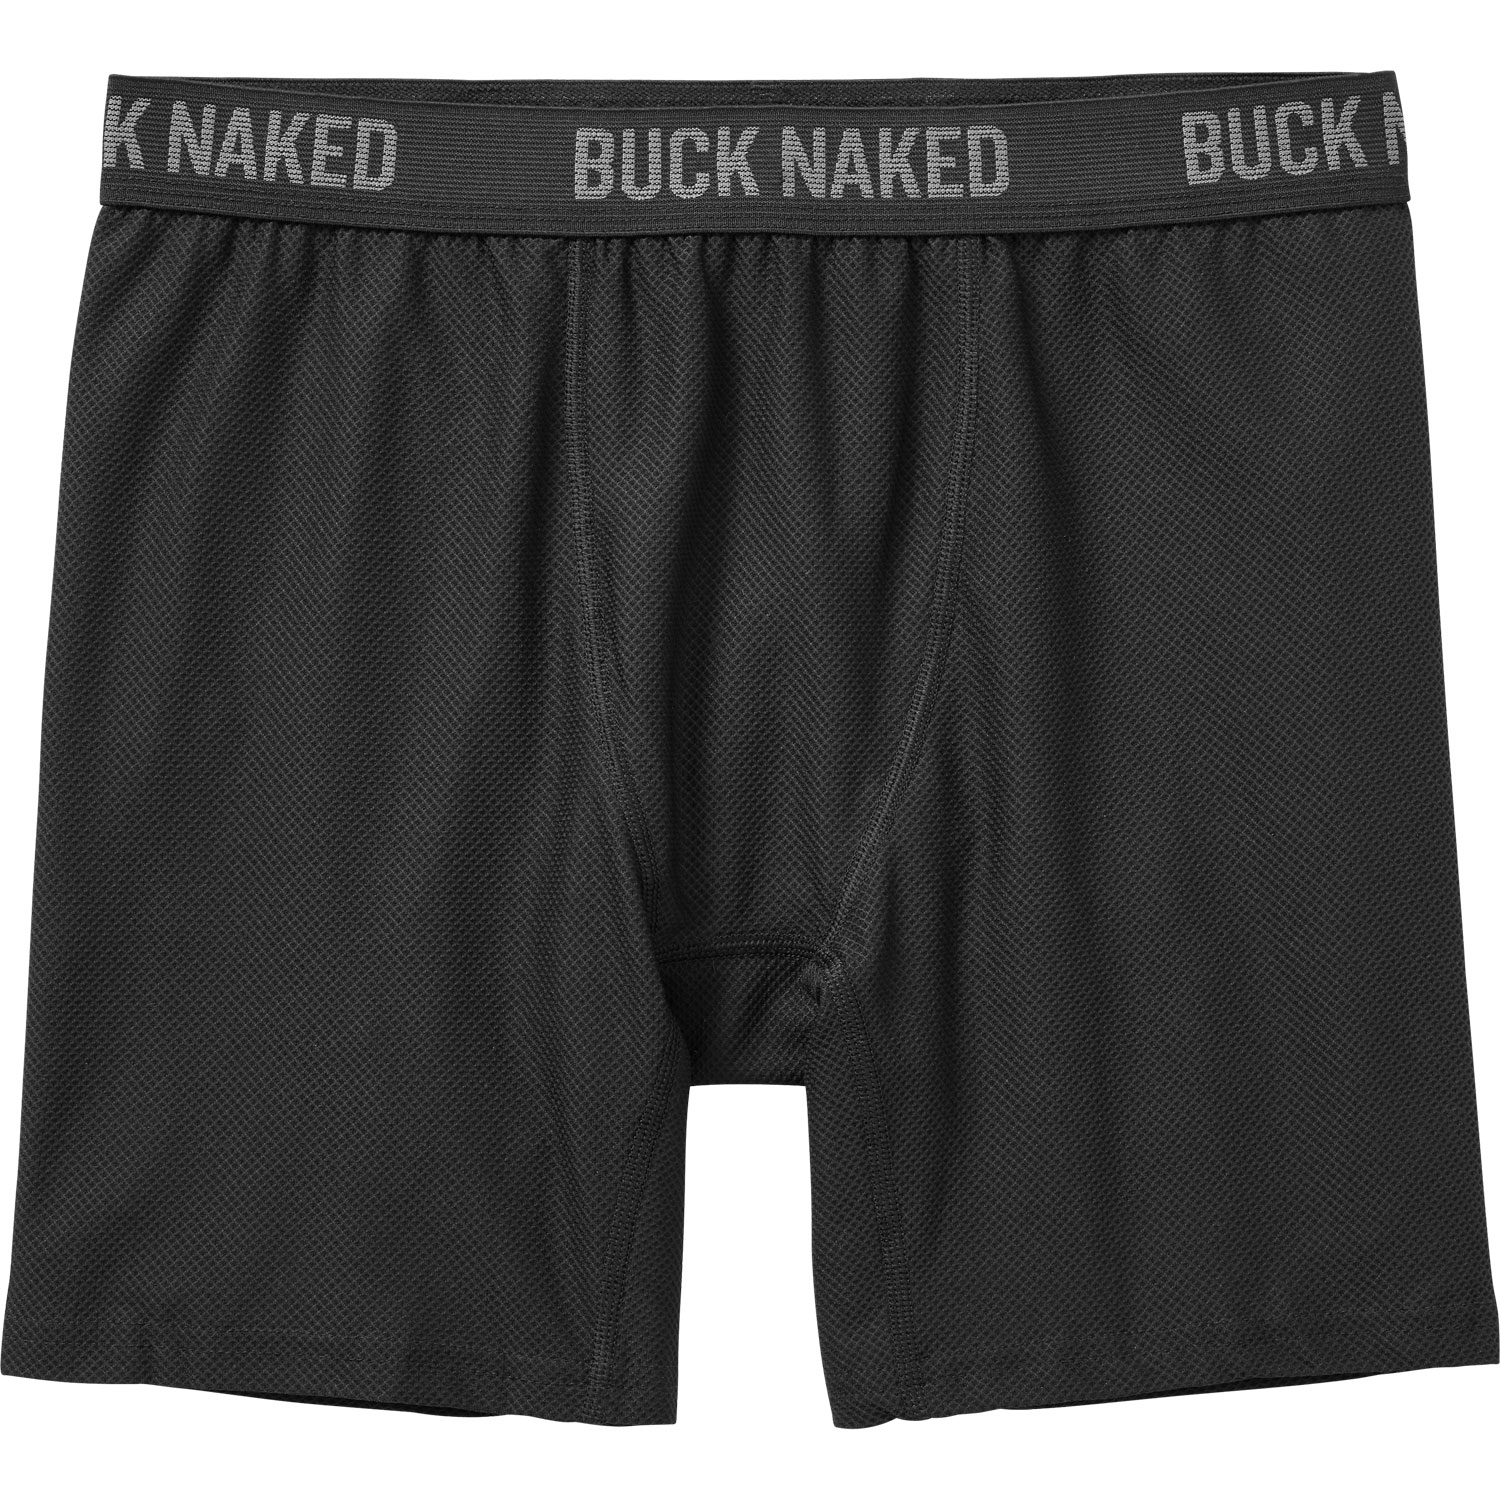 Women's Go Buck Naked Long Boxer Briefs